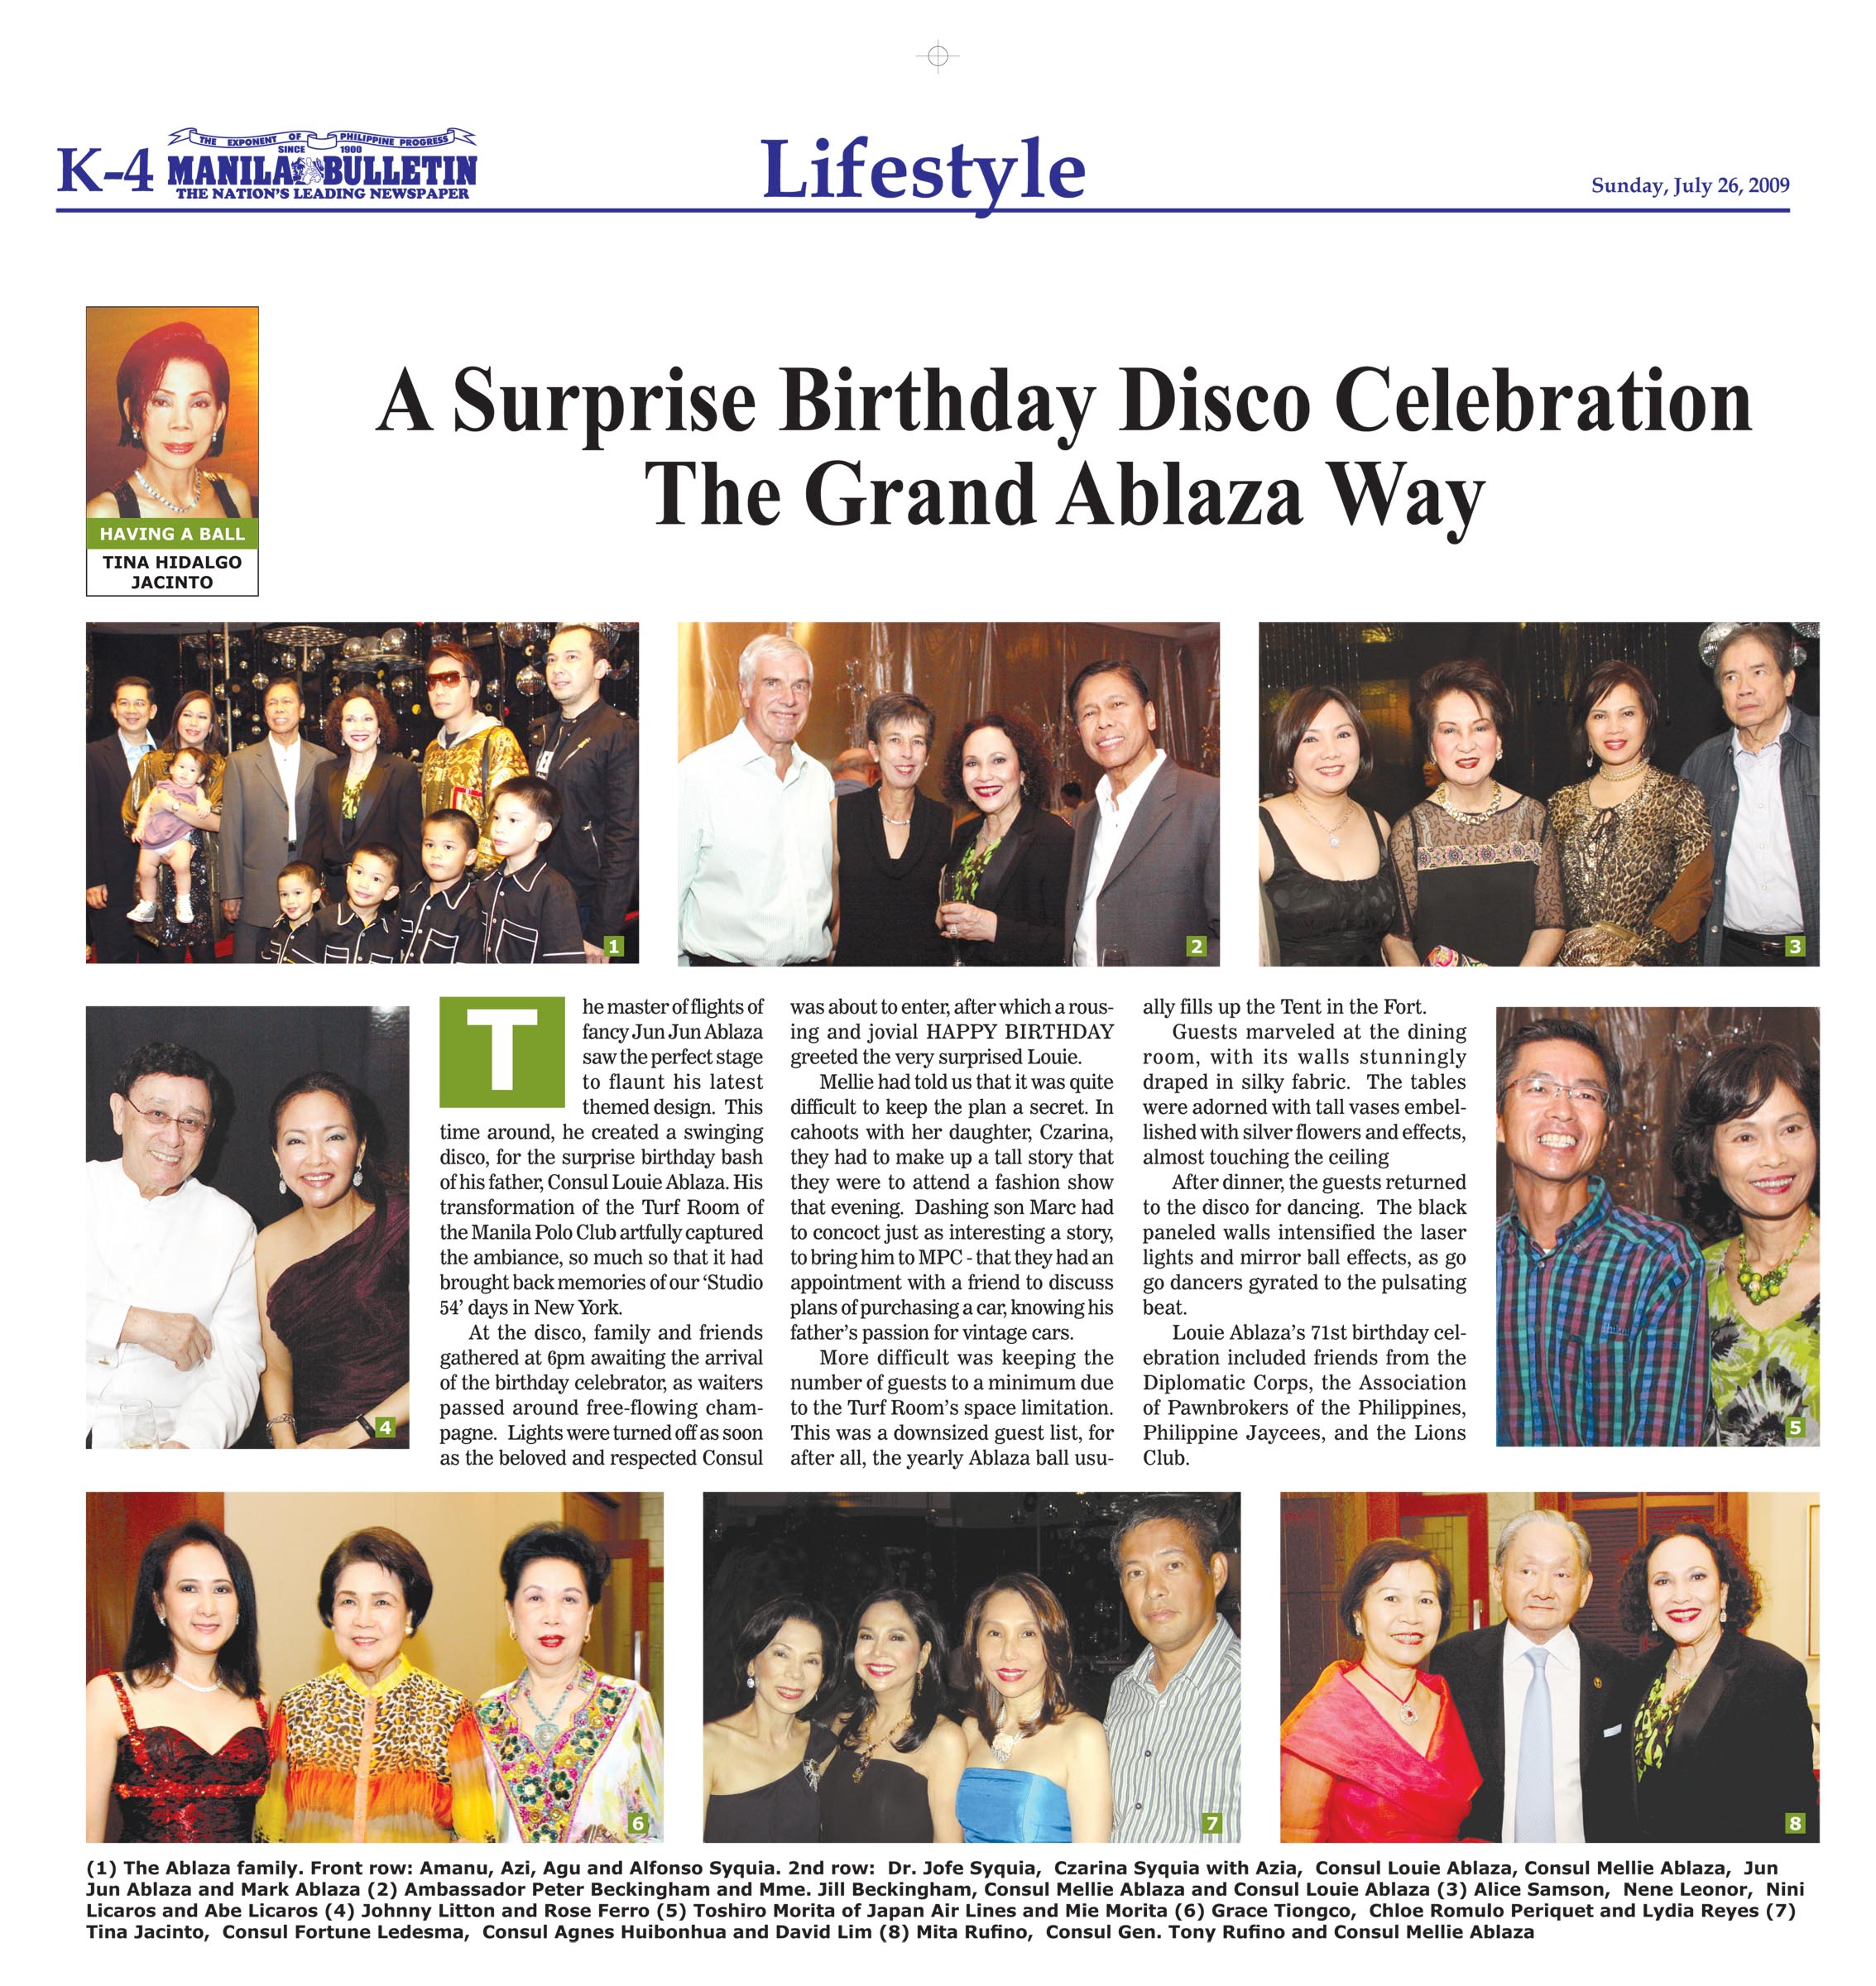 A Surprise Birthday Disco Celebration The Grand Ablaza Way